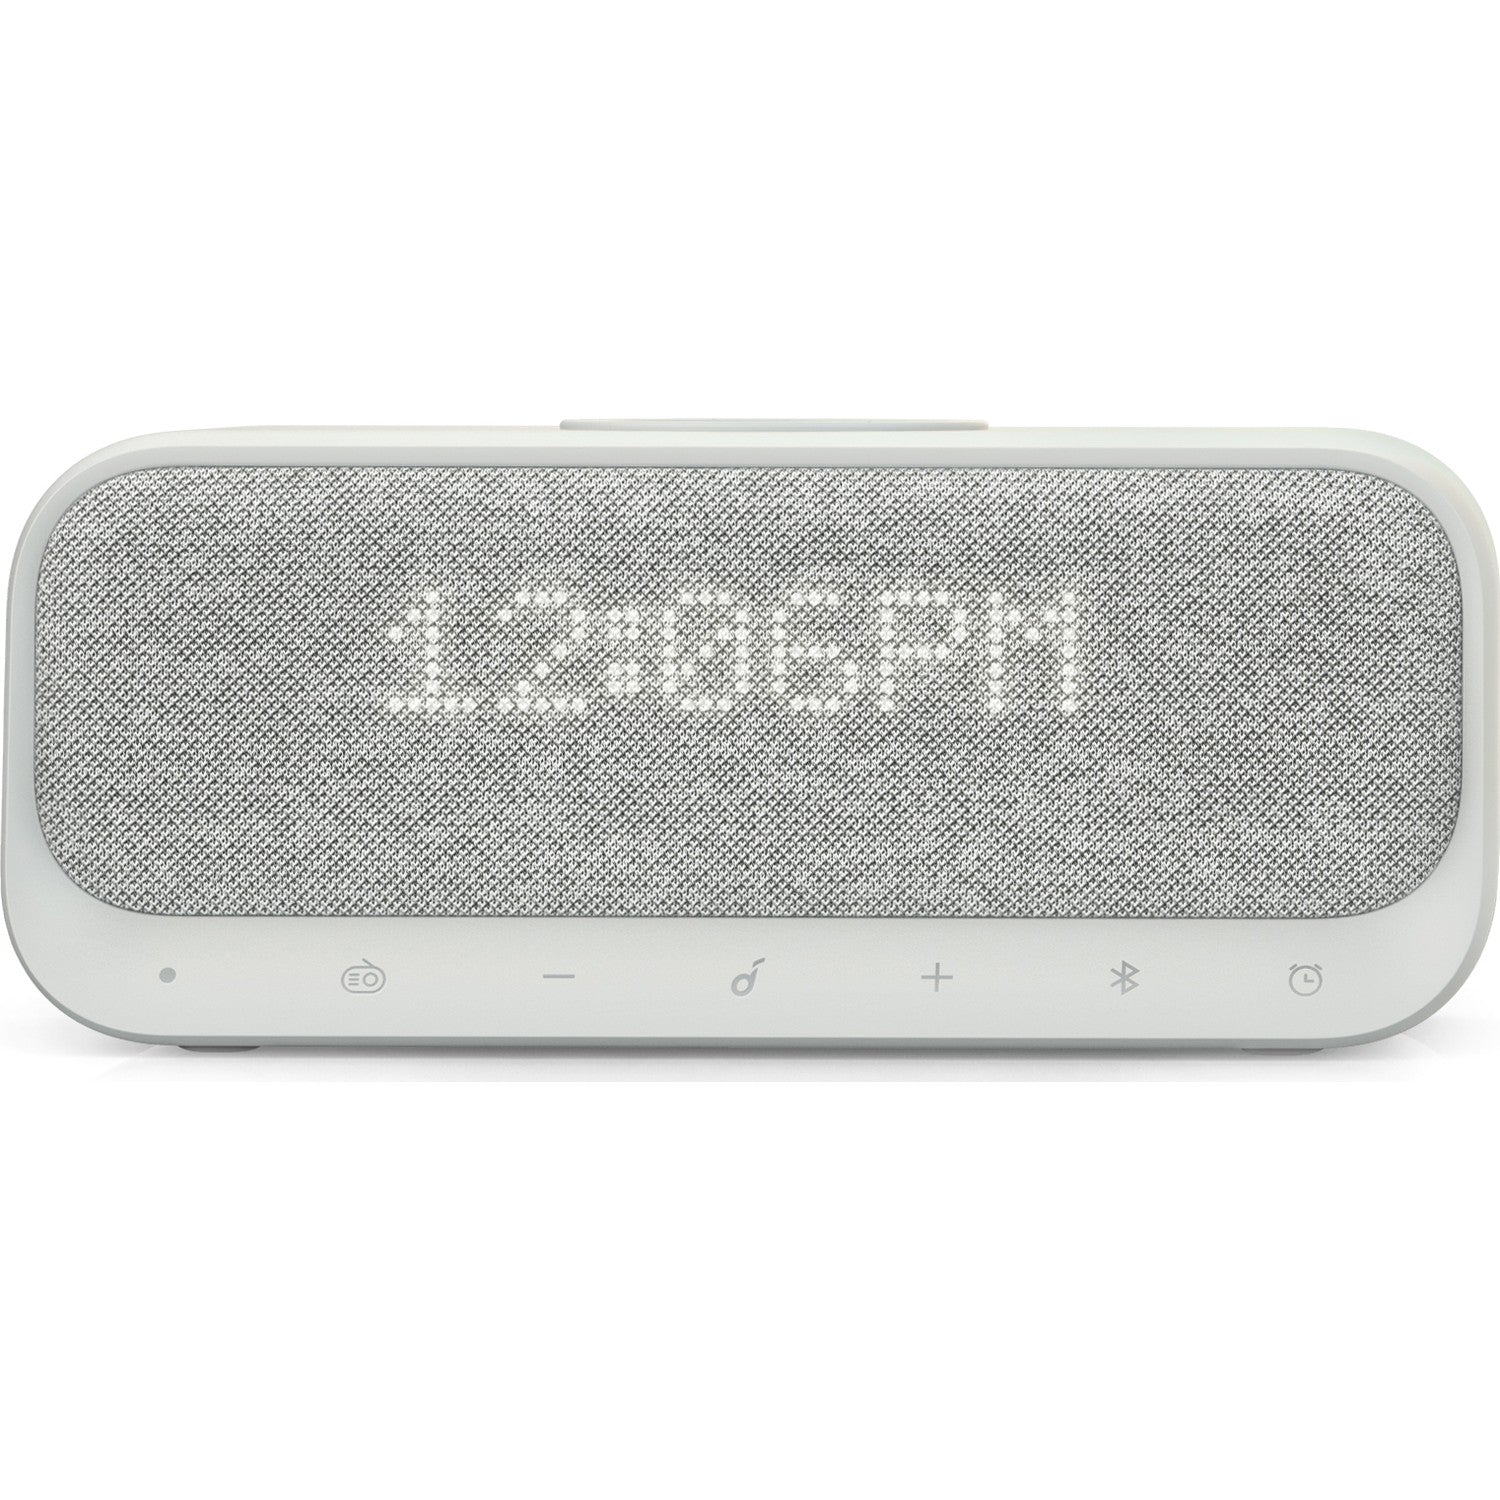 Anker SoundCore Wakey Qi Fast Wireless Charging Alarm Clock FM Radio - Bluetooth 5.0 Stereo Speaker - A3300 - Gray